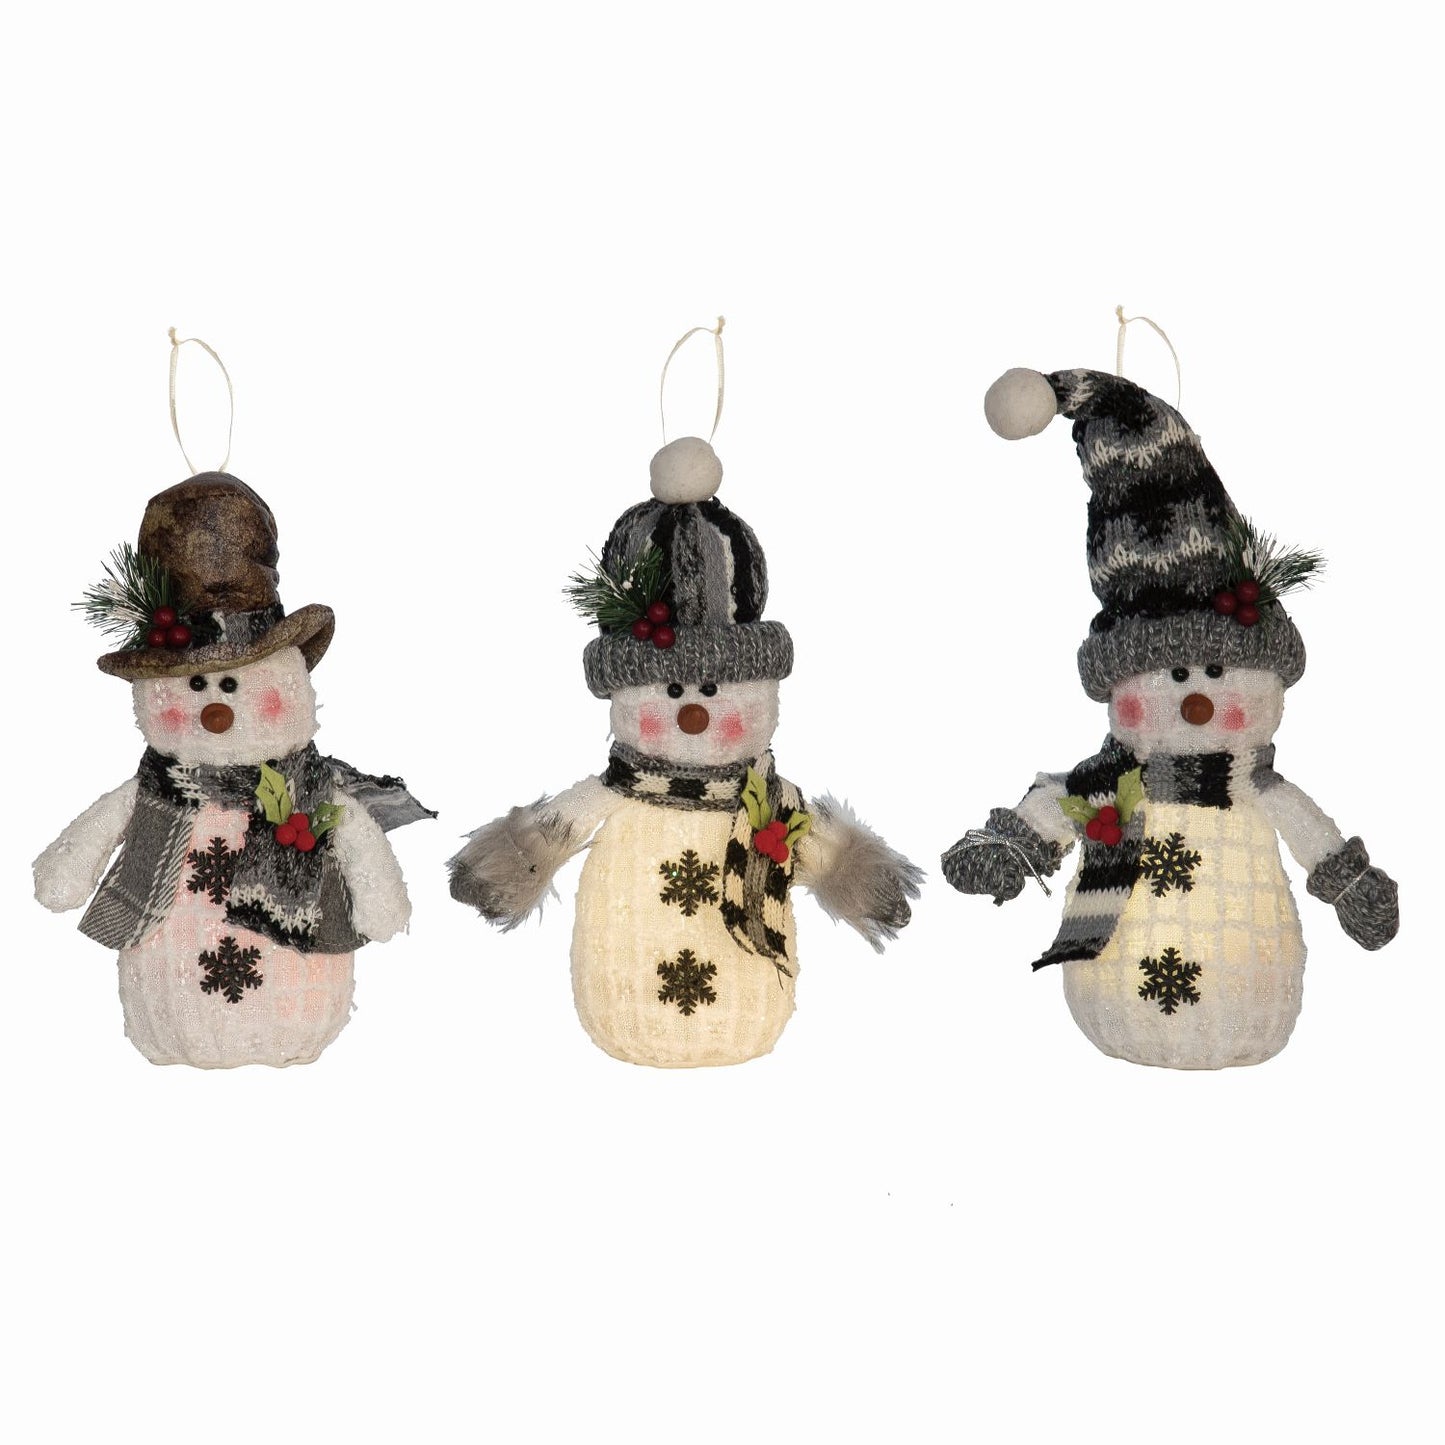 Transpac Plush Light Up Rustic Snowman Ornament, Set Of 3, Assortment